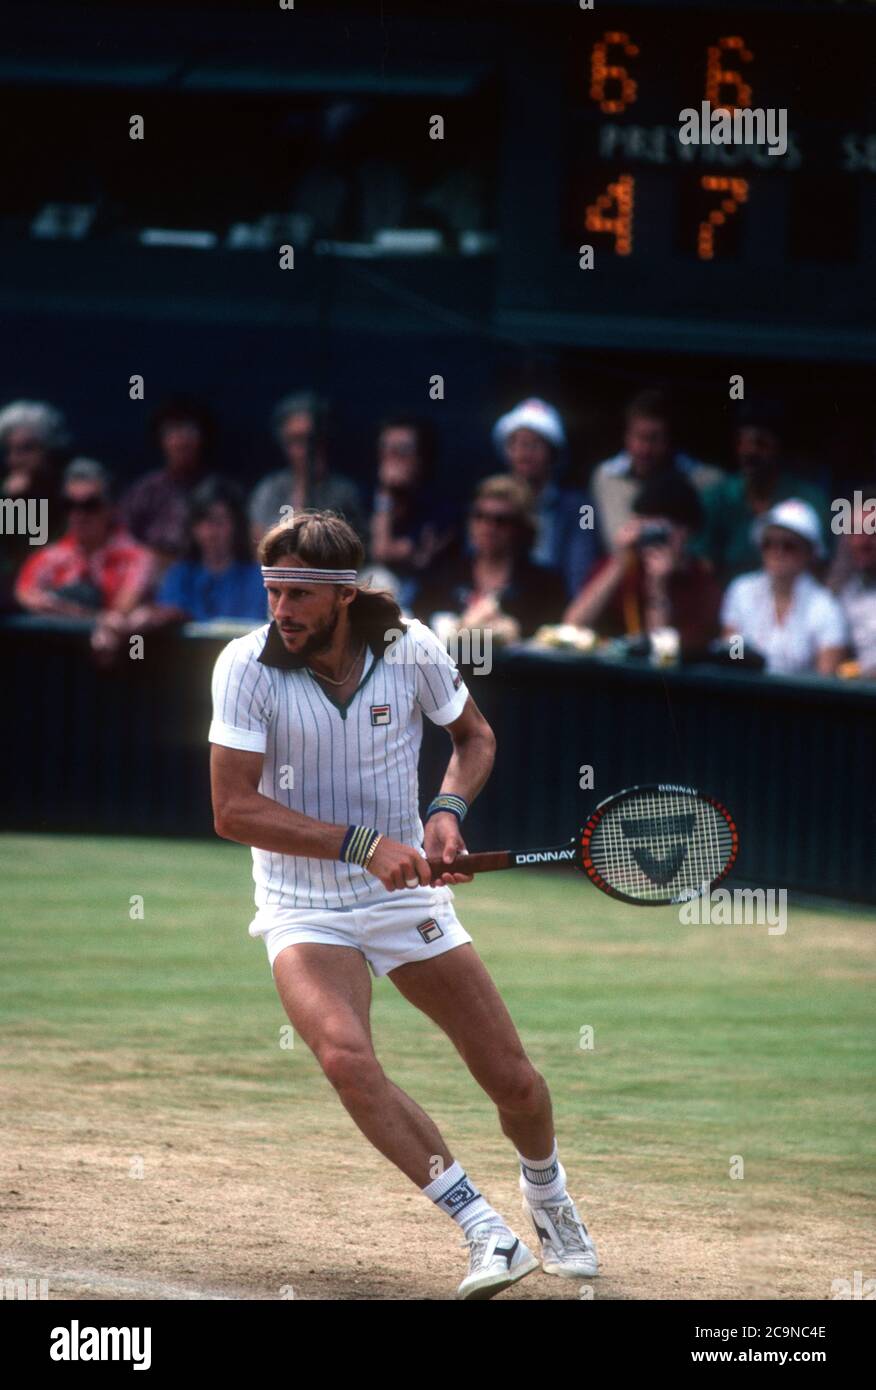 Bjorn Borg Hitting Forehand At Wimbledon by Bettmann